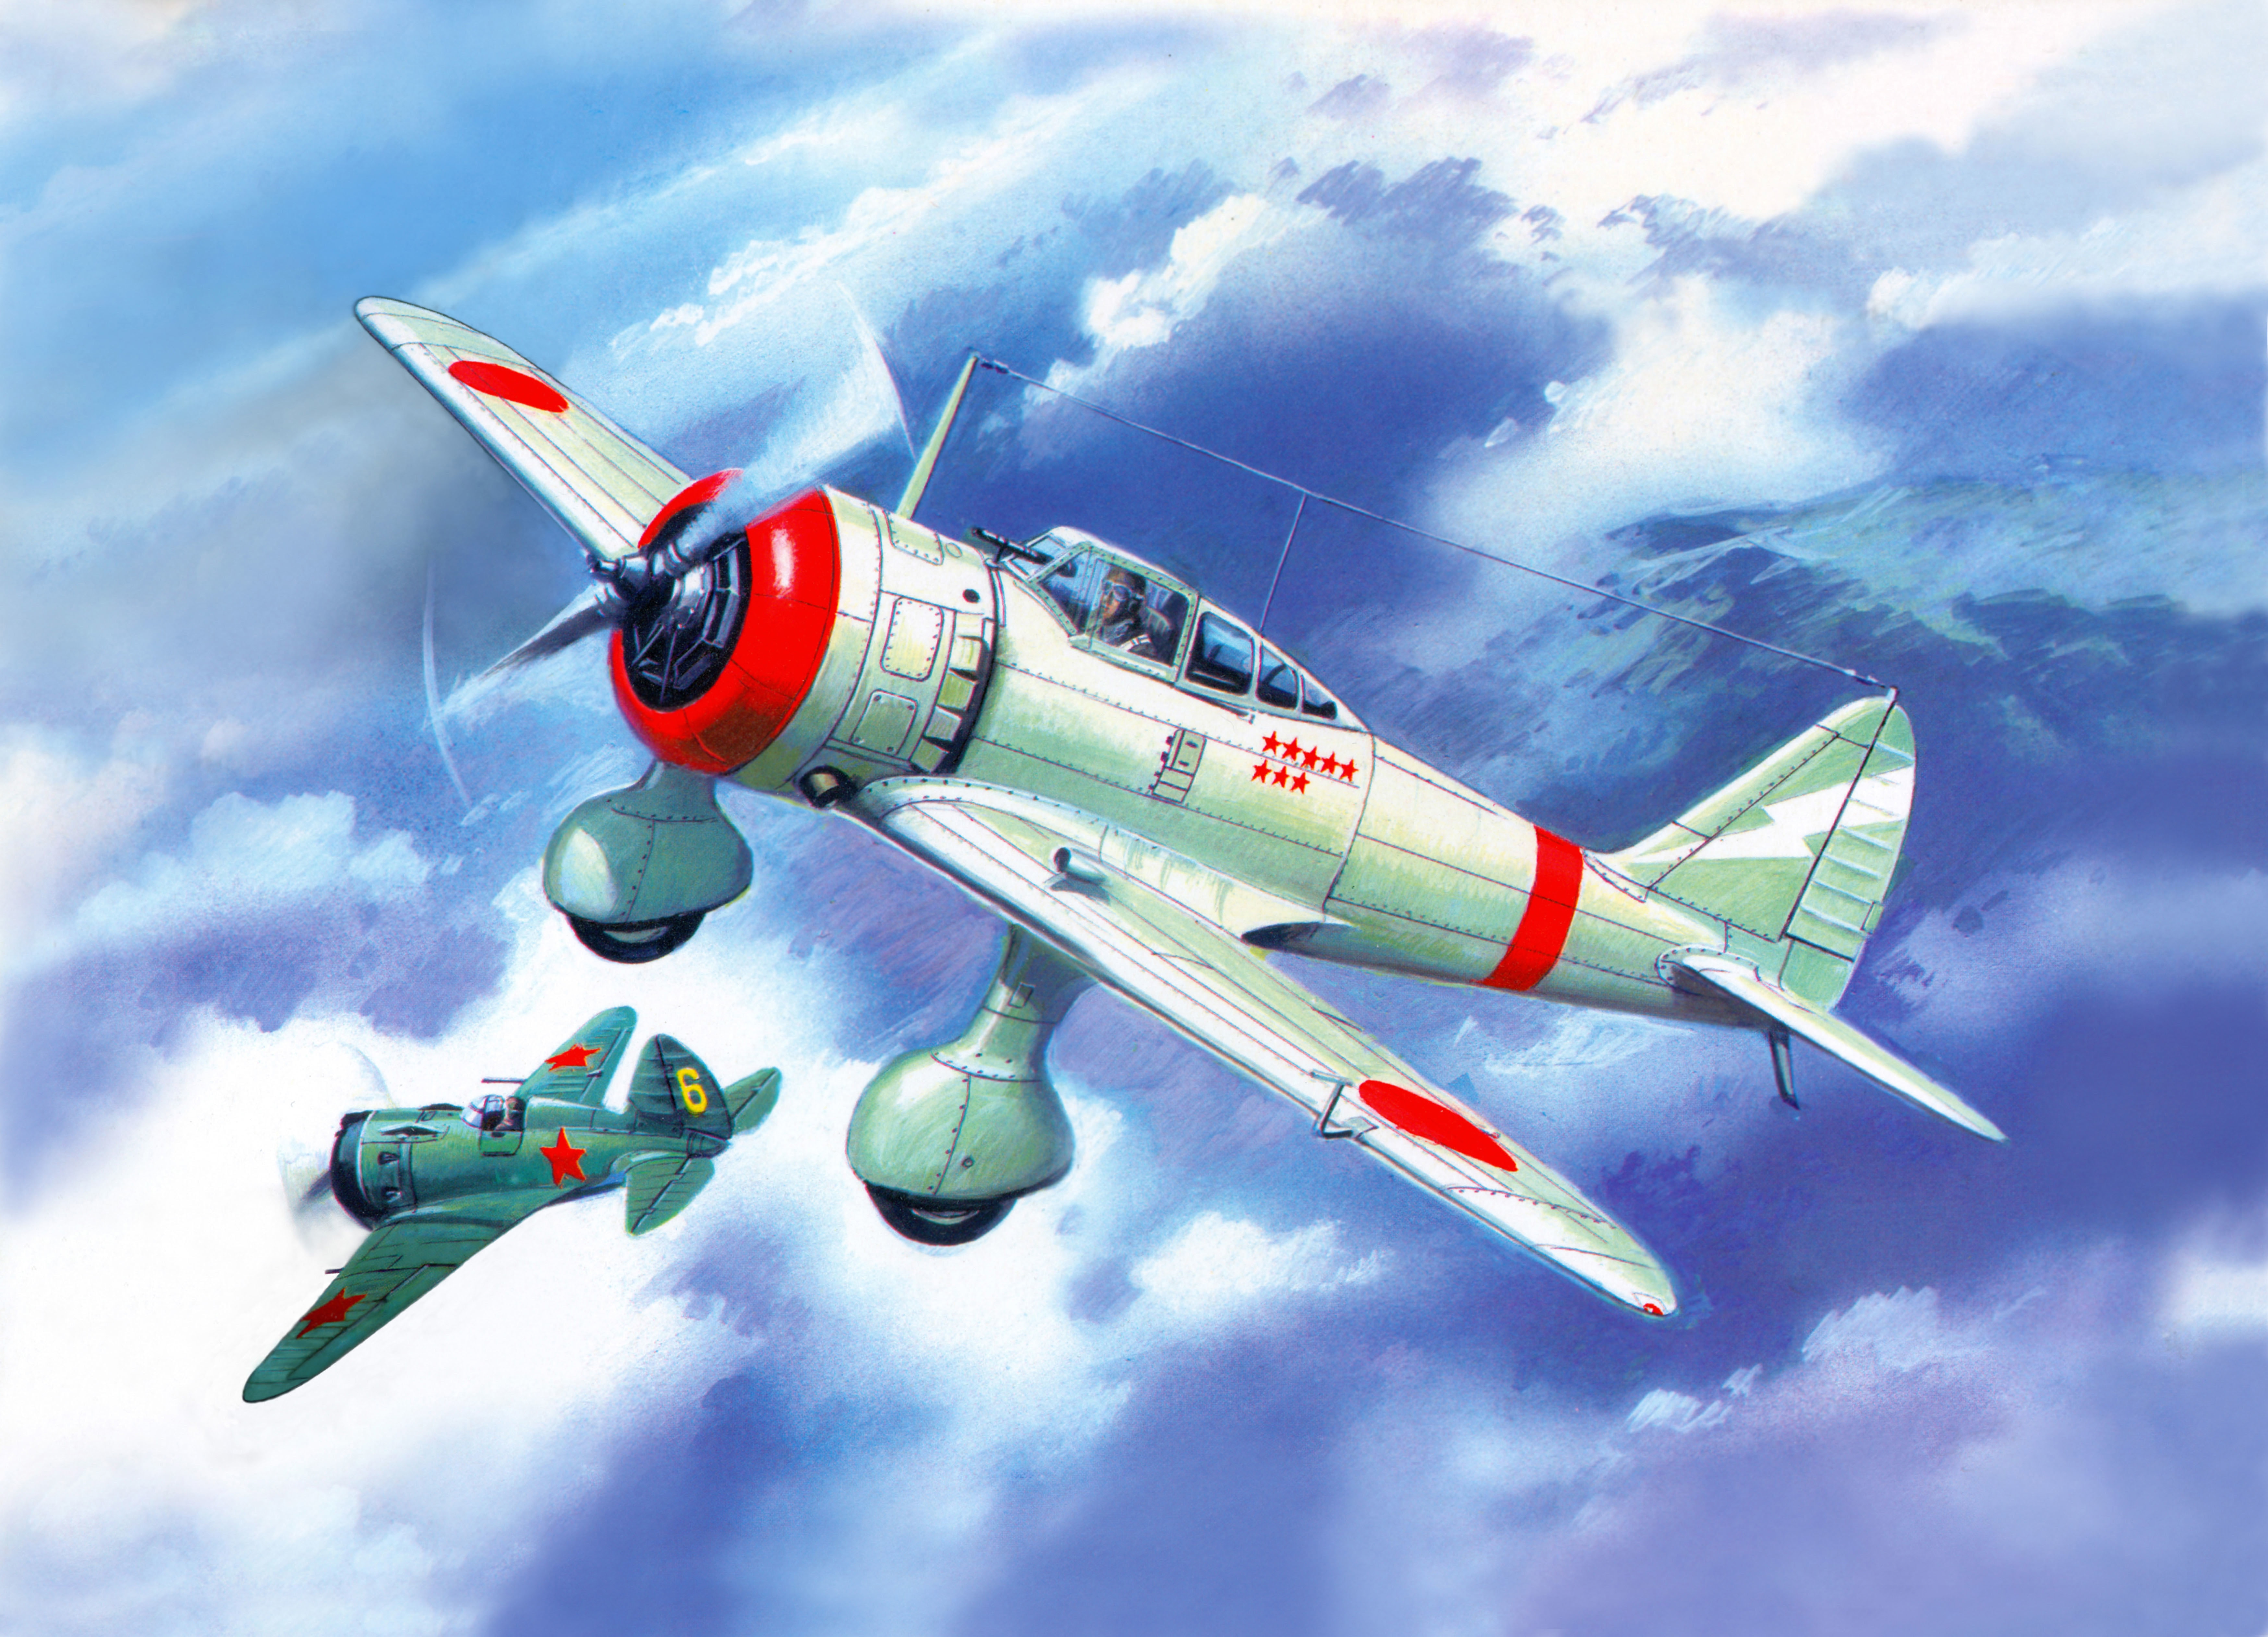 Japan Army Fighter Ki-27b toy plane, the sky, figure, battle